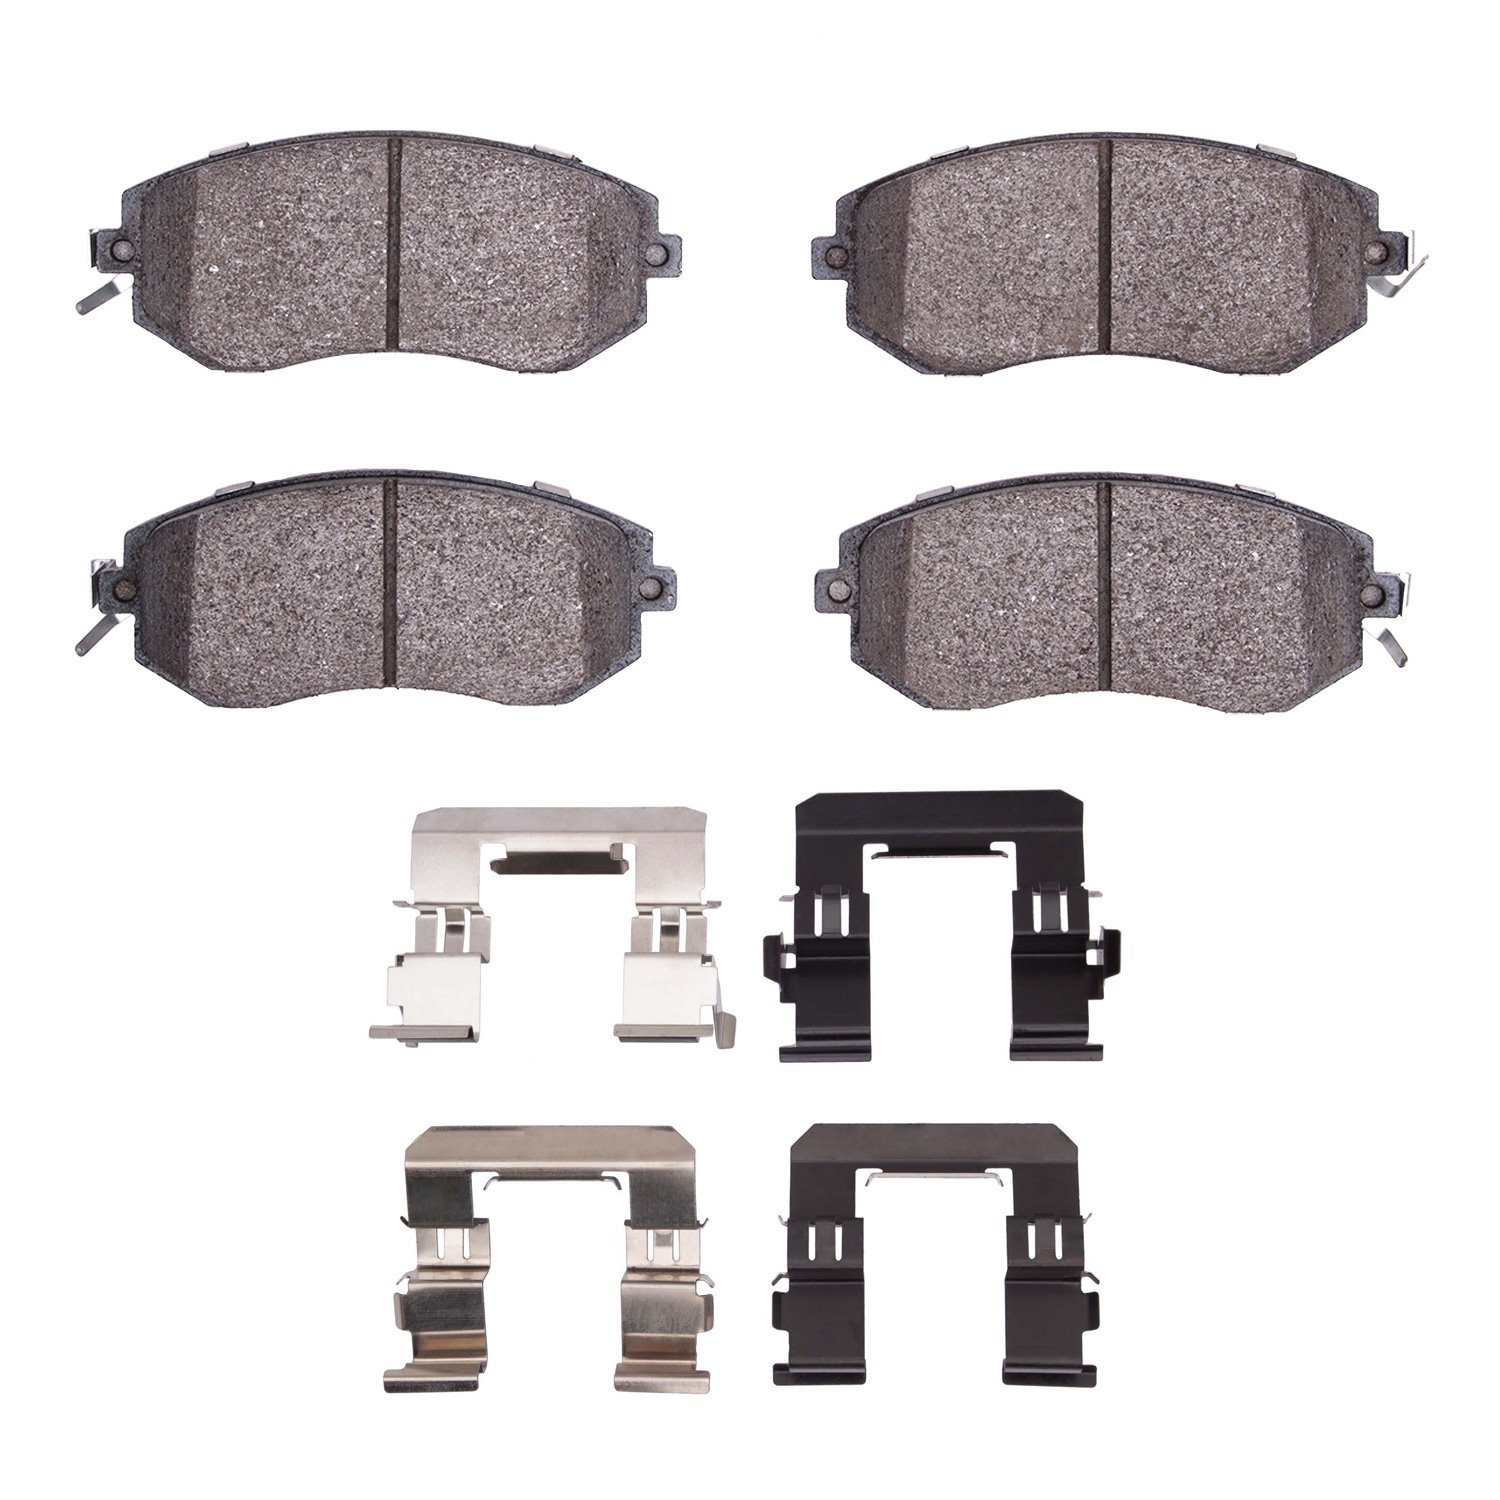 1552-1539-01 5000 Advanced Ceramic Brake Pads & Hardware Kit, Fits Select Multiple Makes/Models, Position: Front